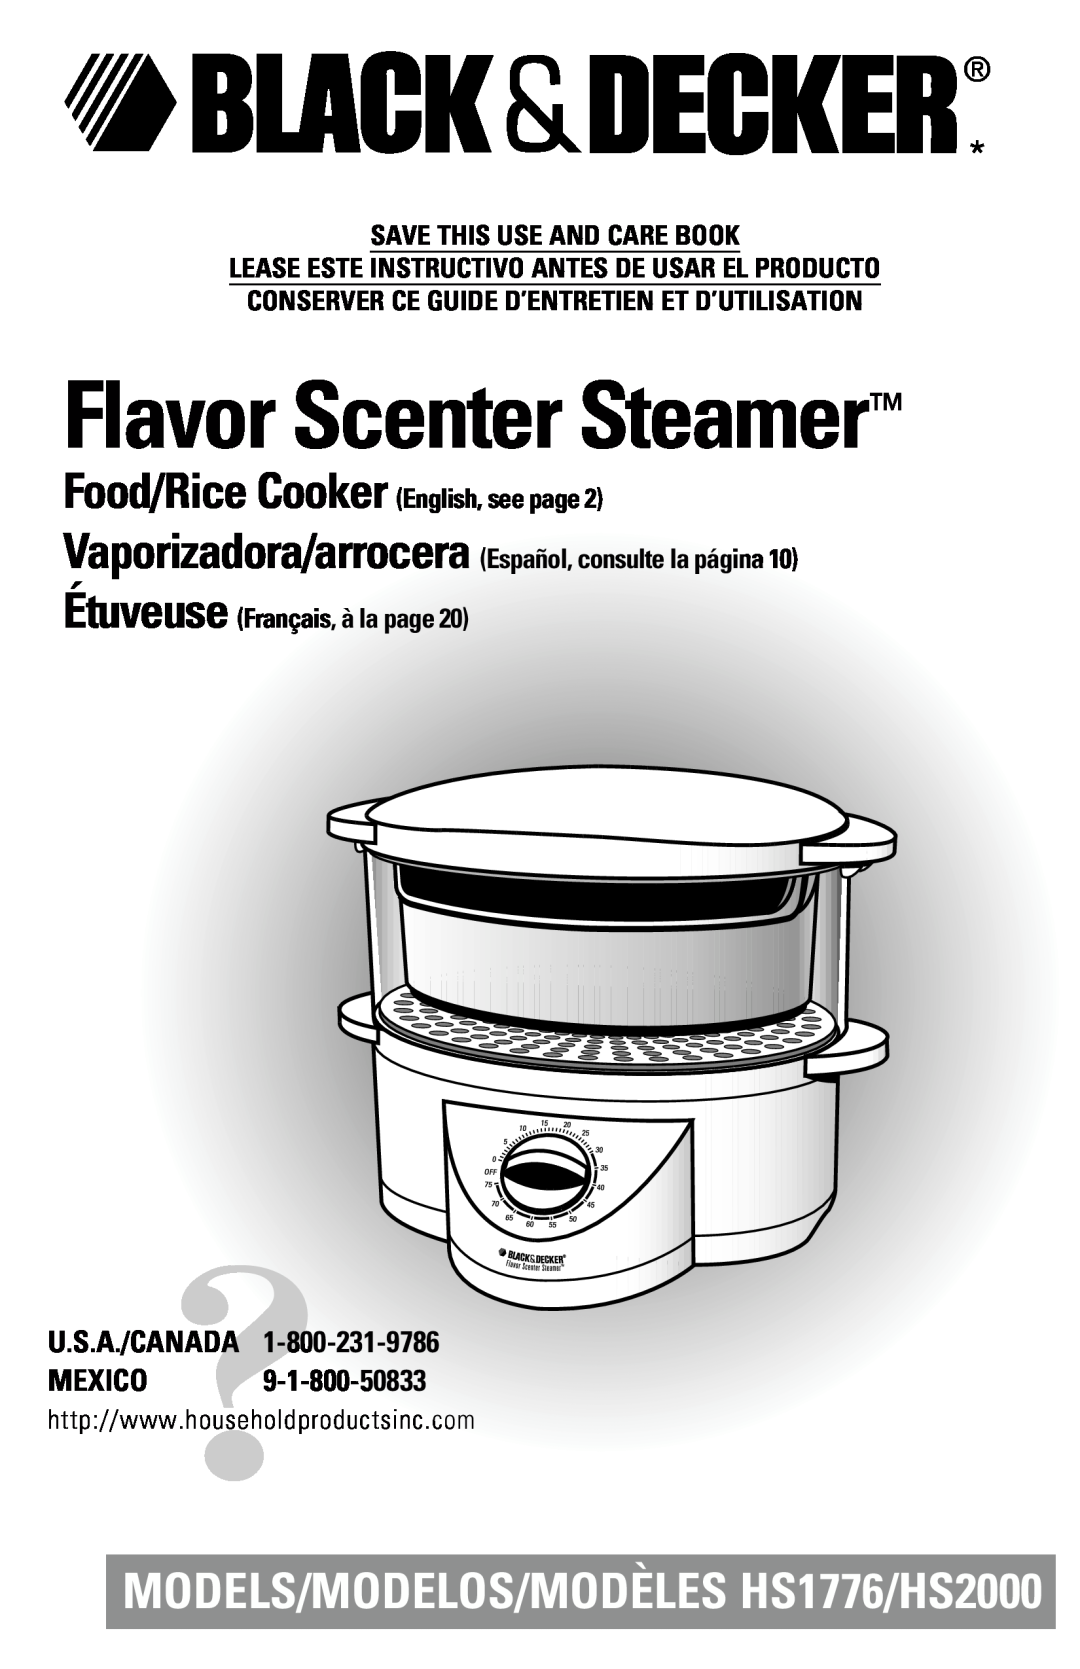 Black & Decker manual Flavor Scenter Steamer, MODELS/MODELOS/MODÈLES HS1776/HS2000, U.S.A./Canada Mexico 